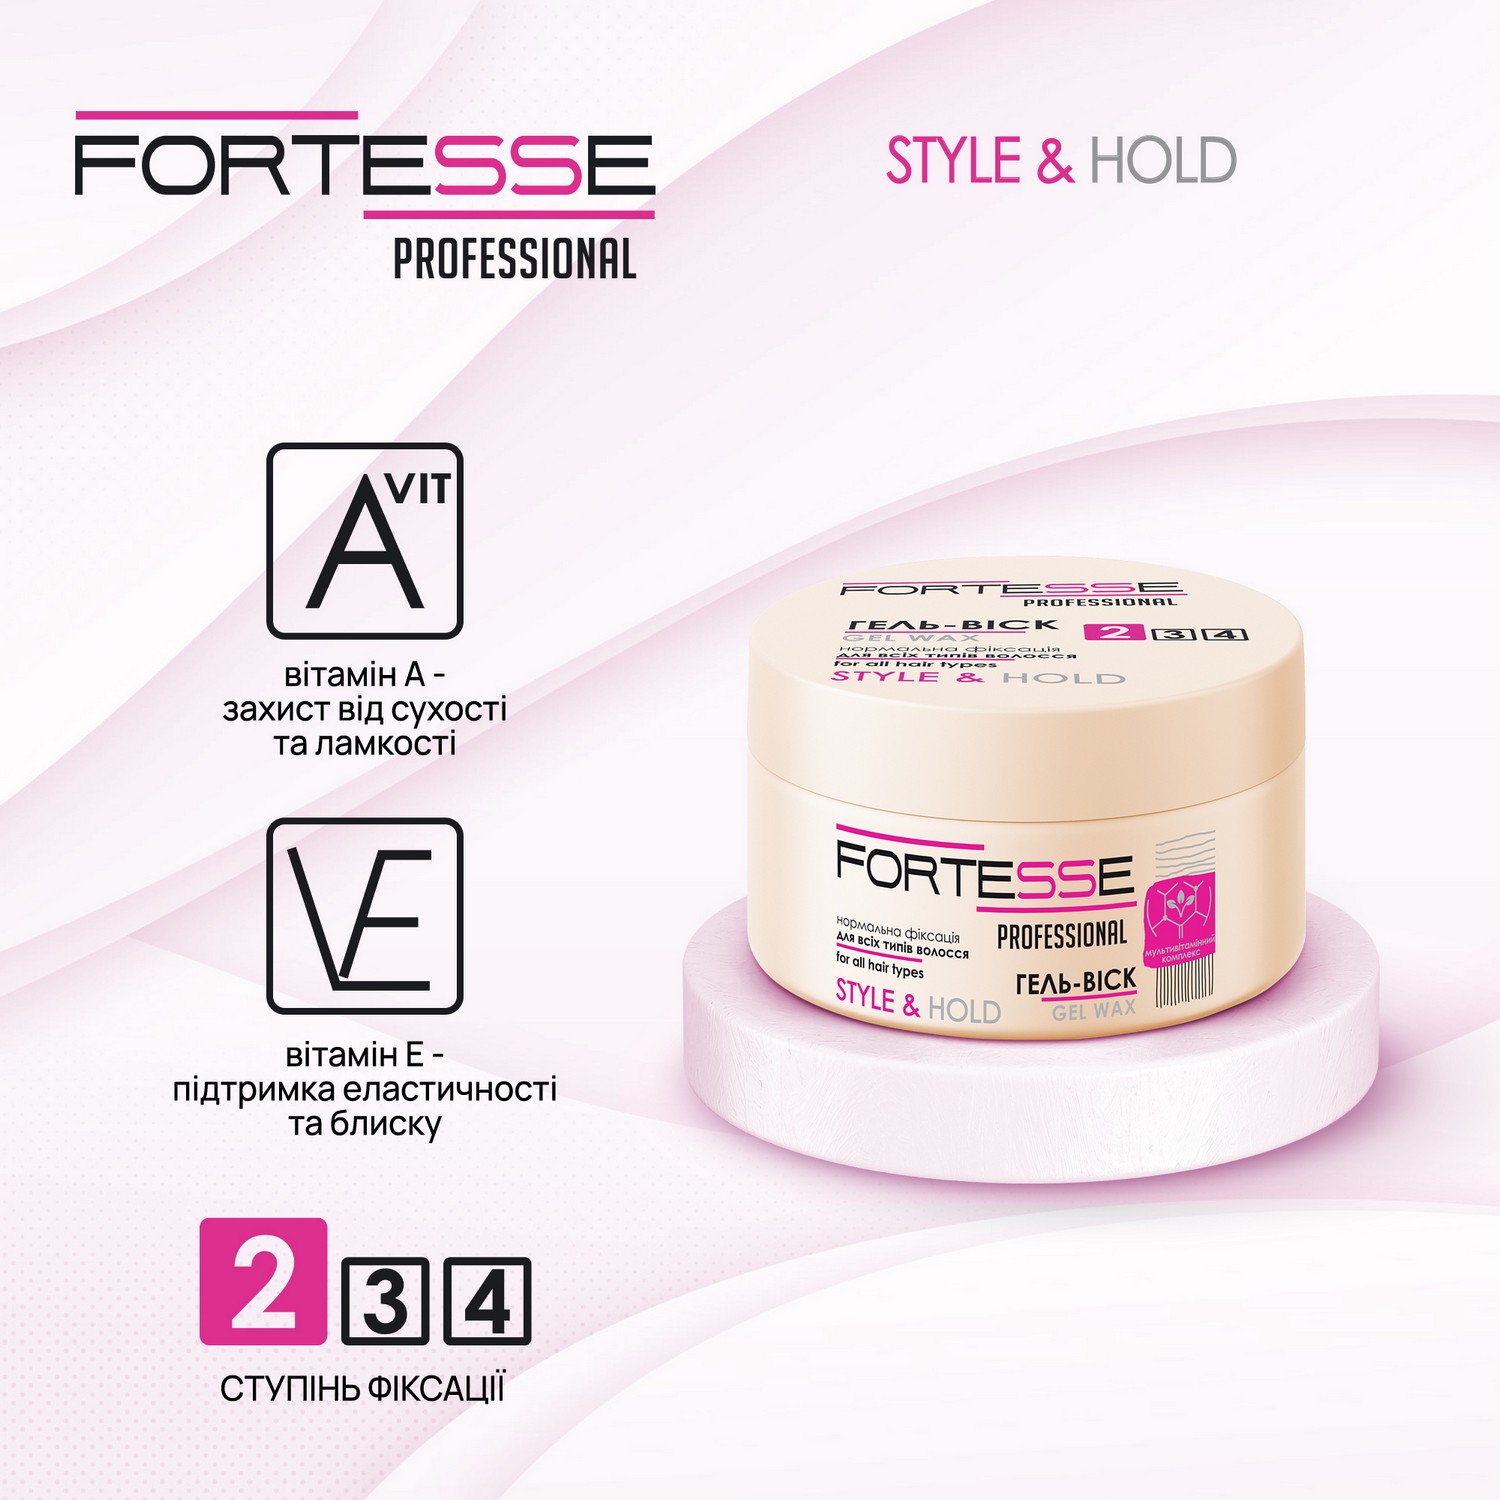 Гель-віск для волосся Fortesse Professional Style & Hold нормальна фіксація, 75 мл - фото 2